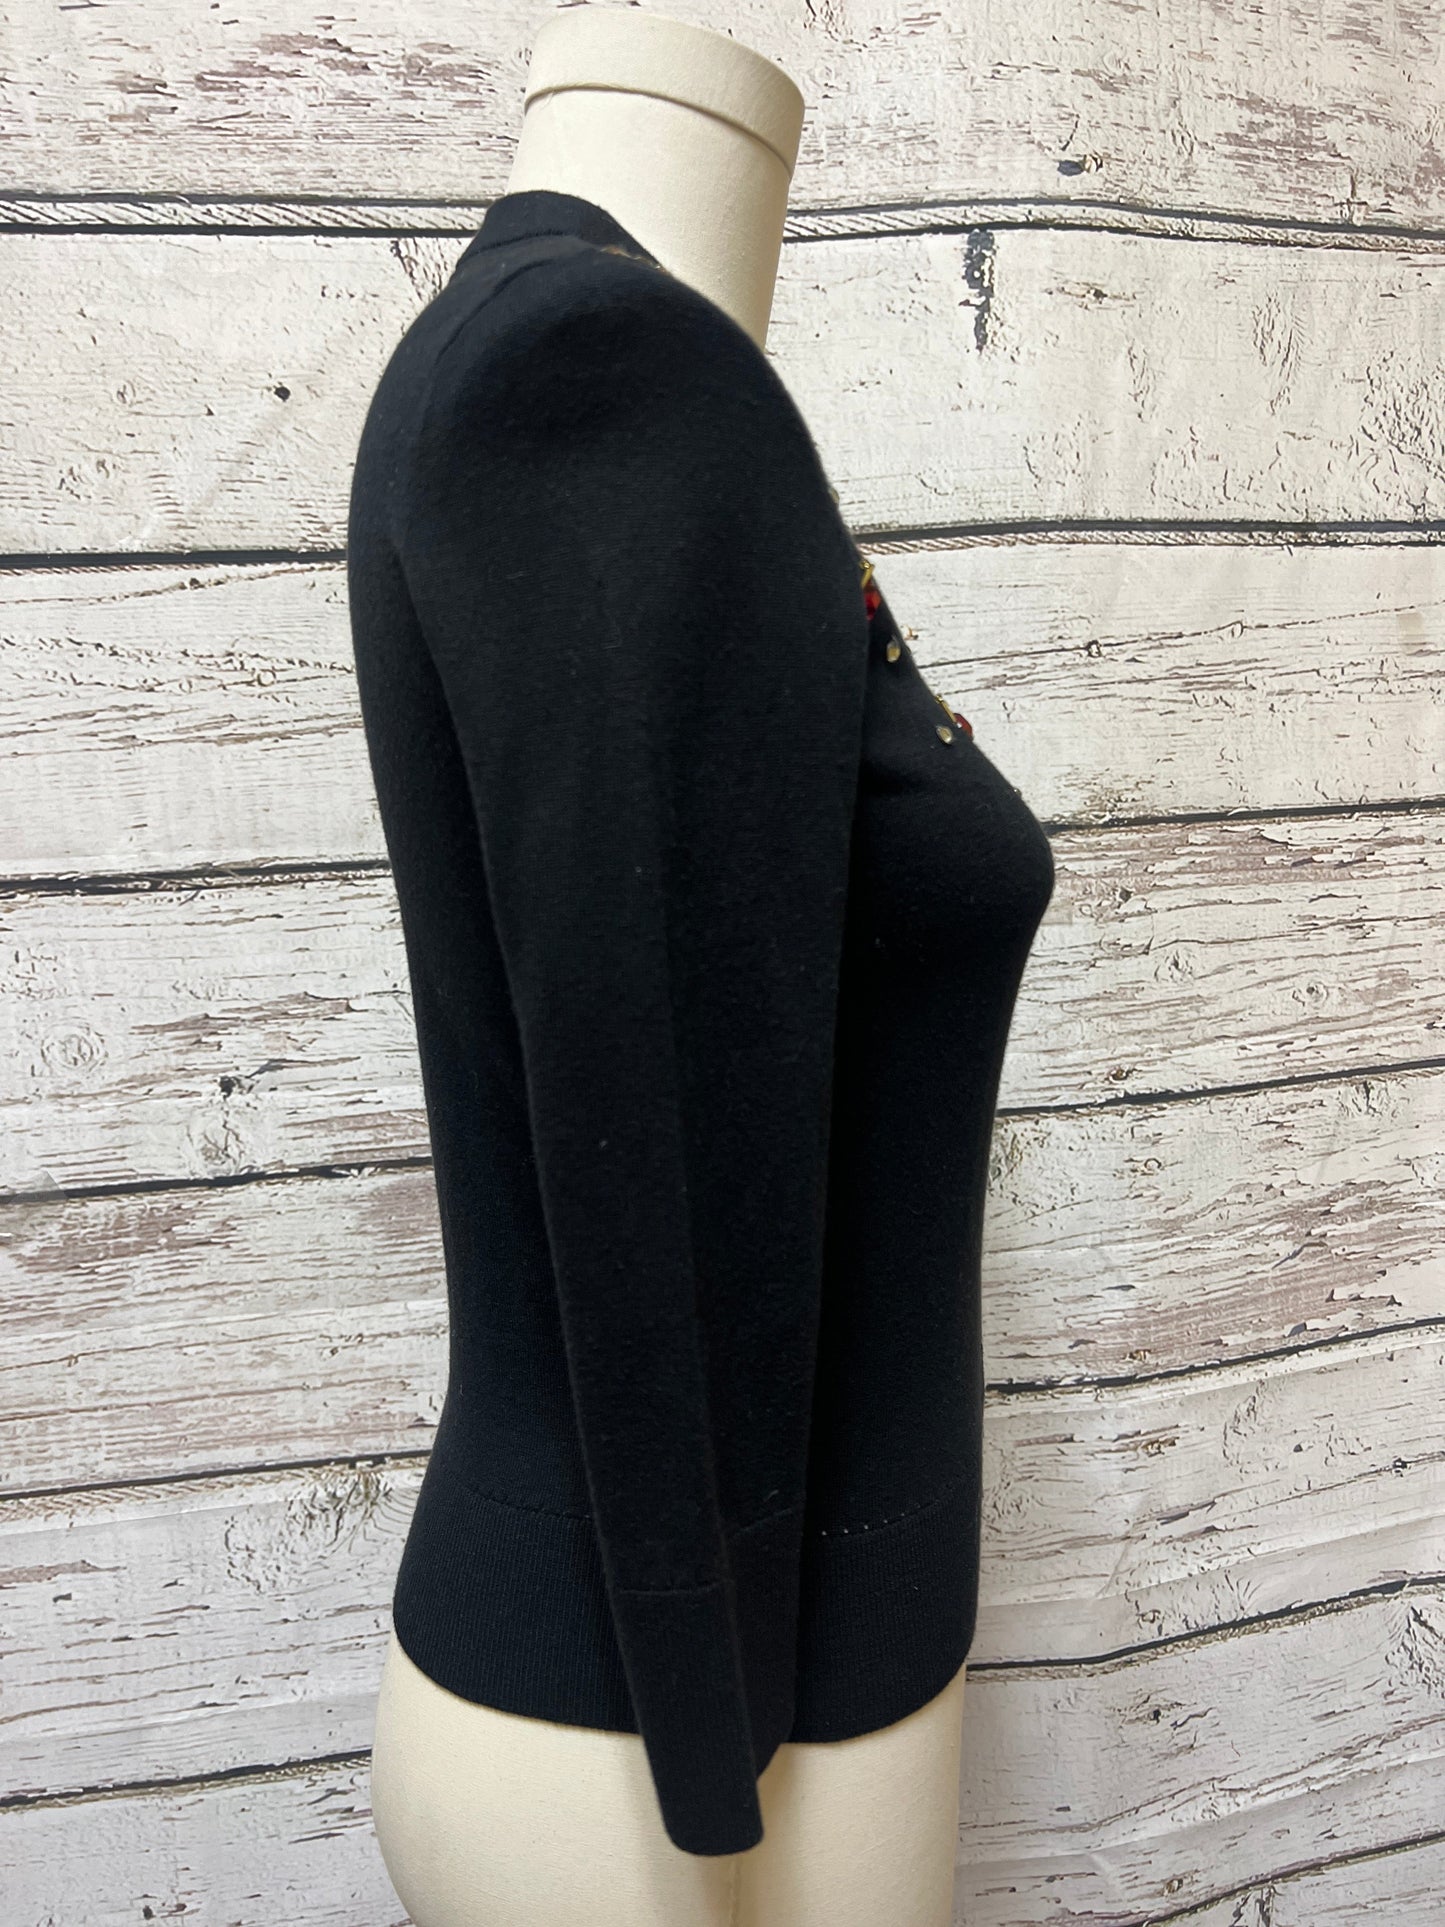 Sweater Cardigan Designer By Kate Spade  Size: Xs